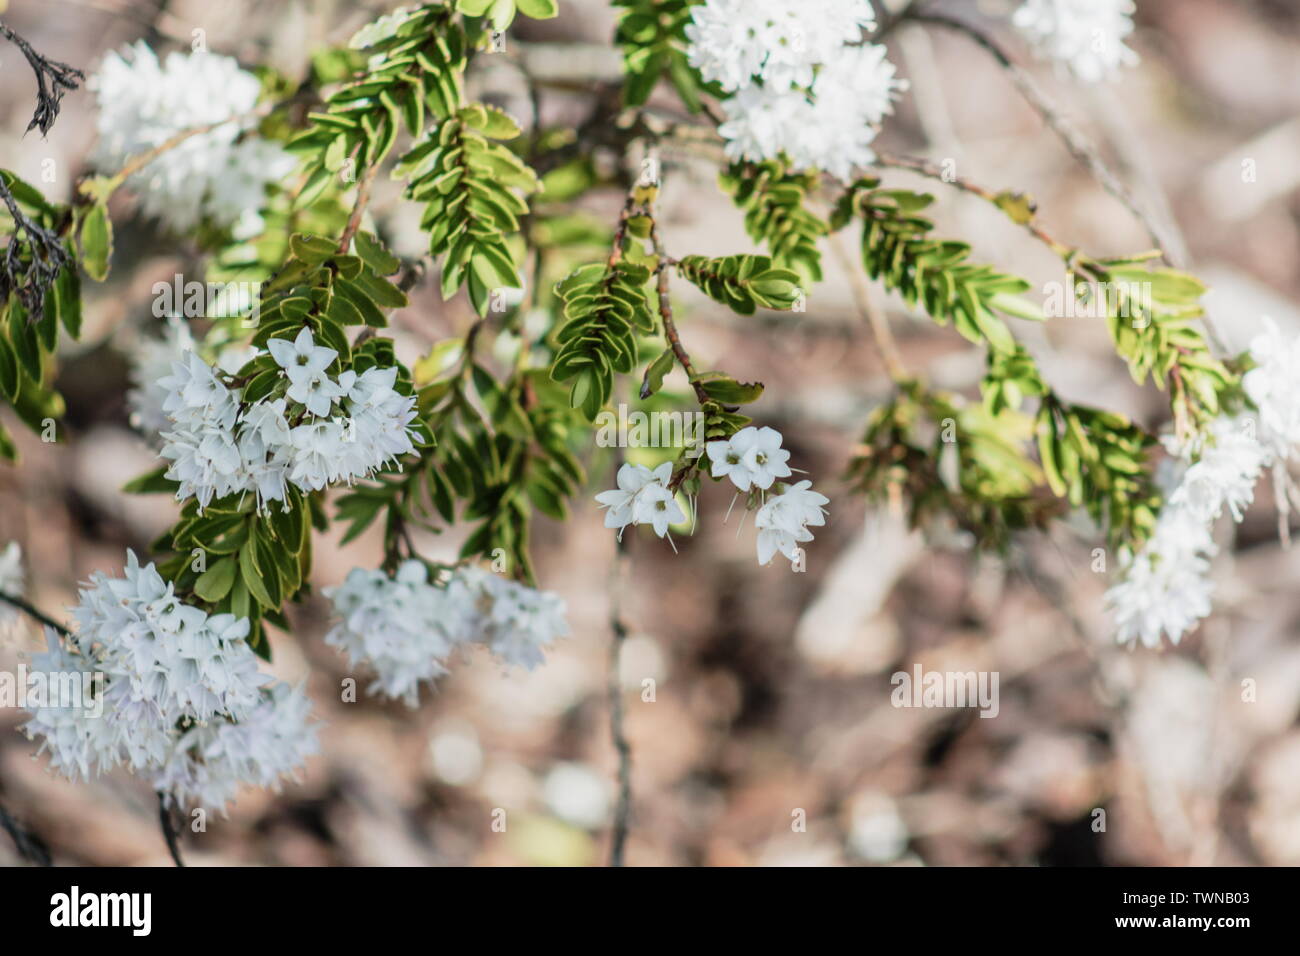 Background image of White Hebe Flowers Stock Photo